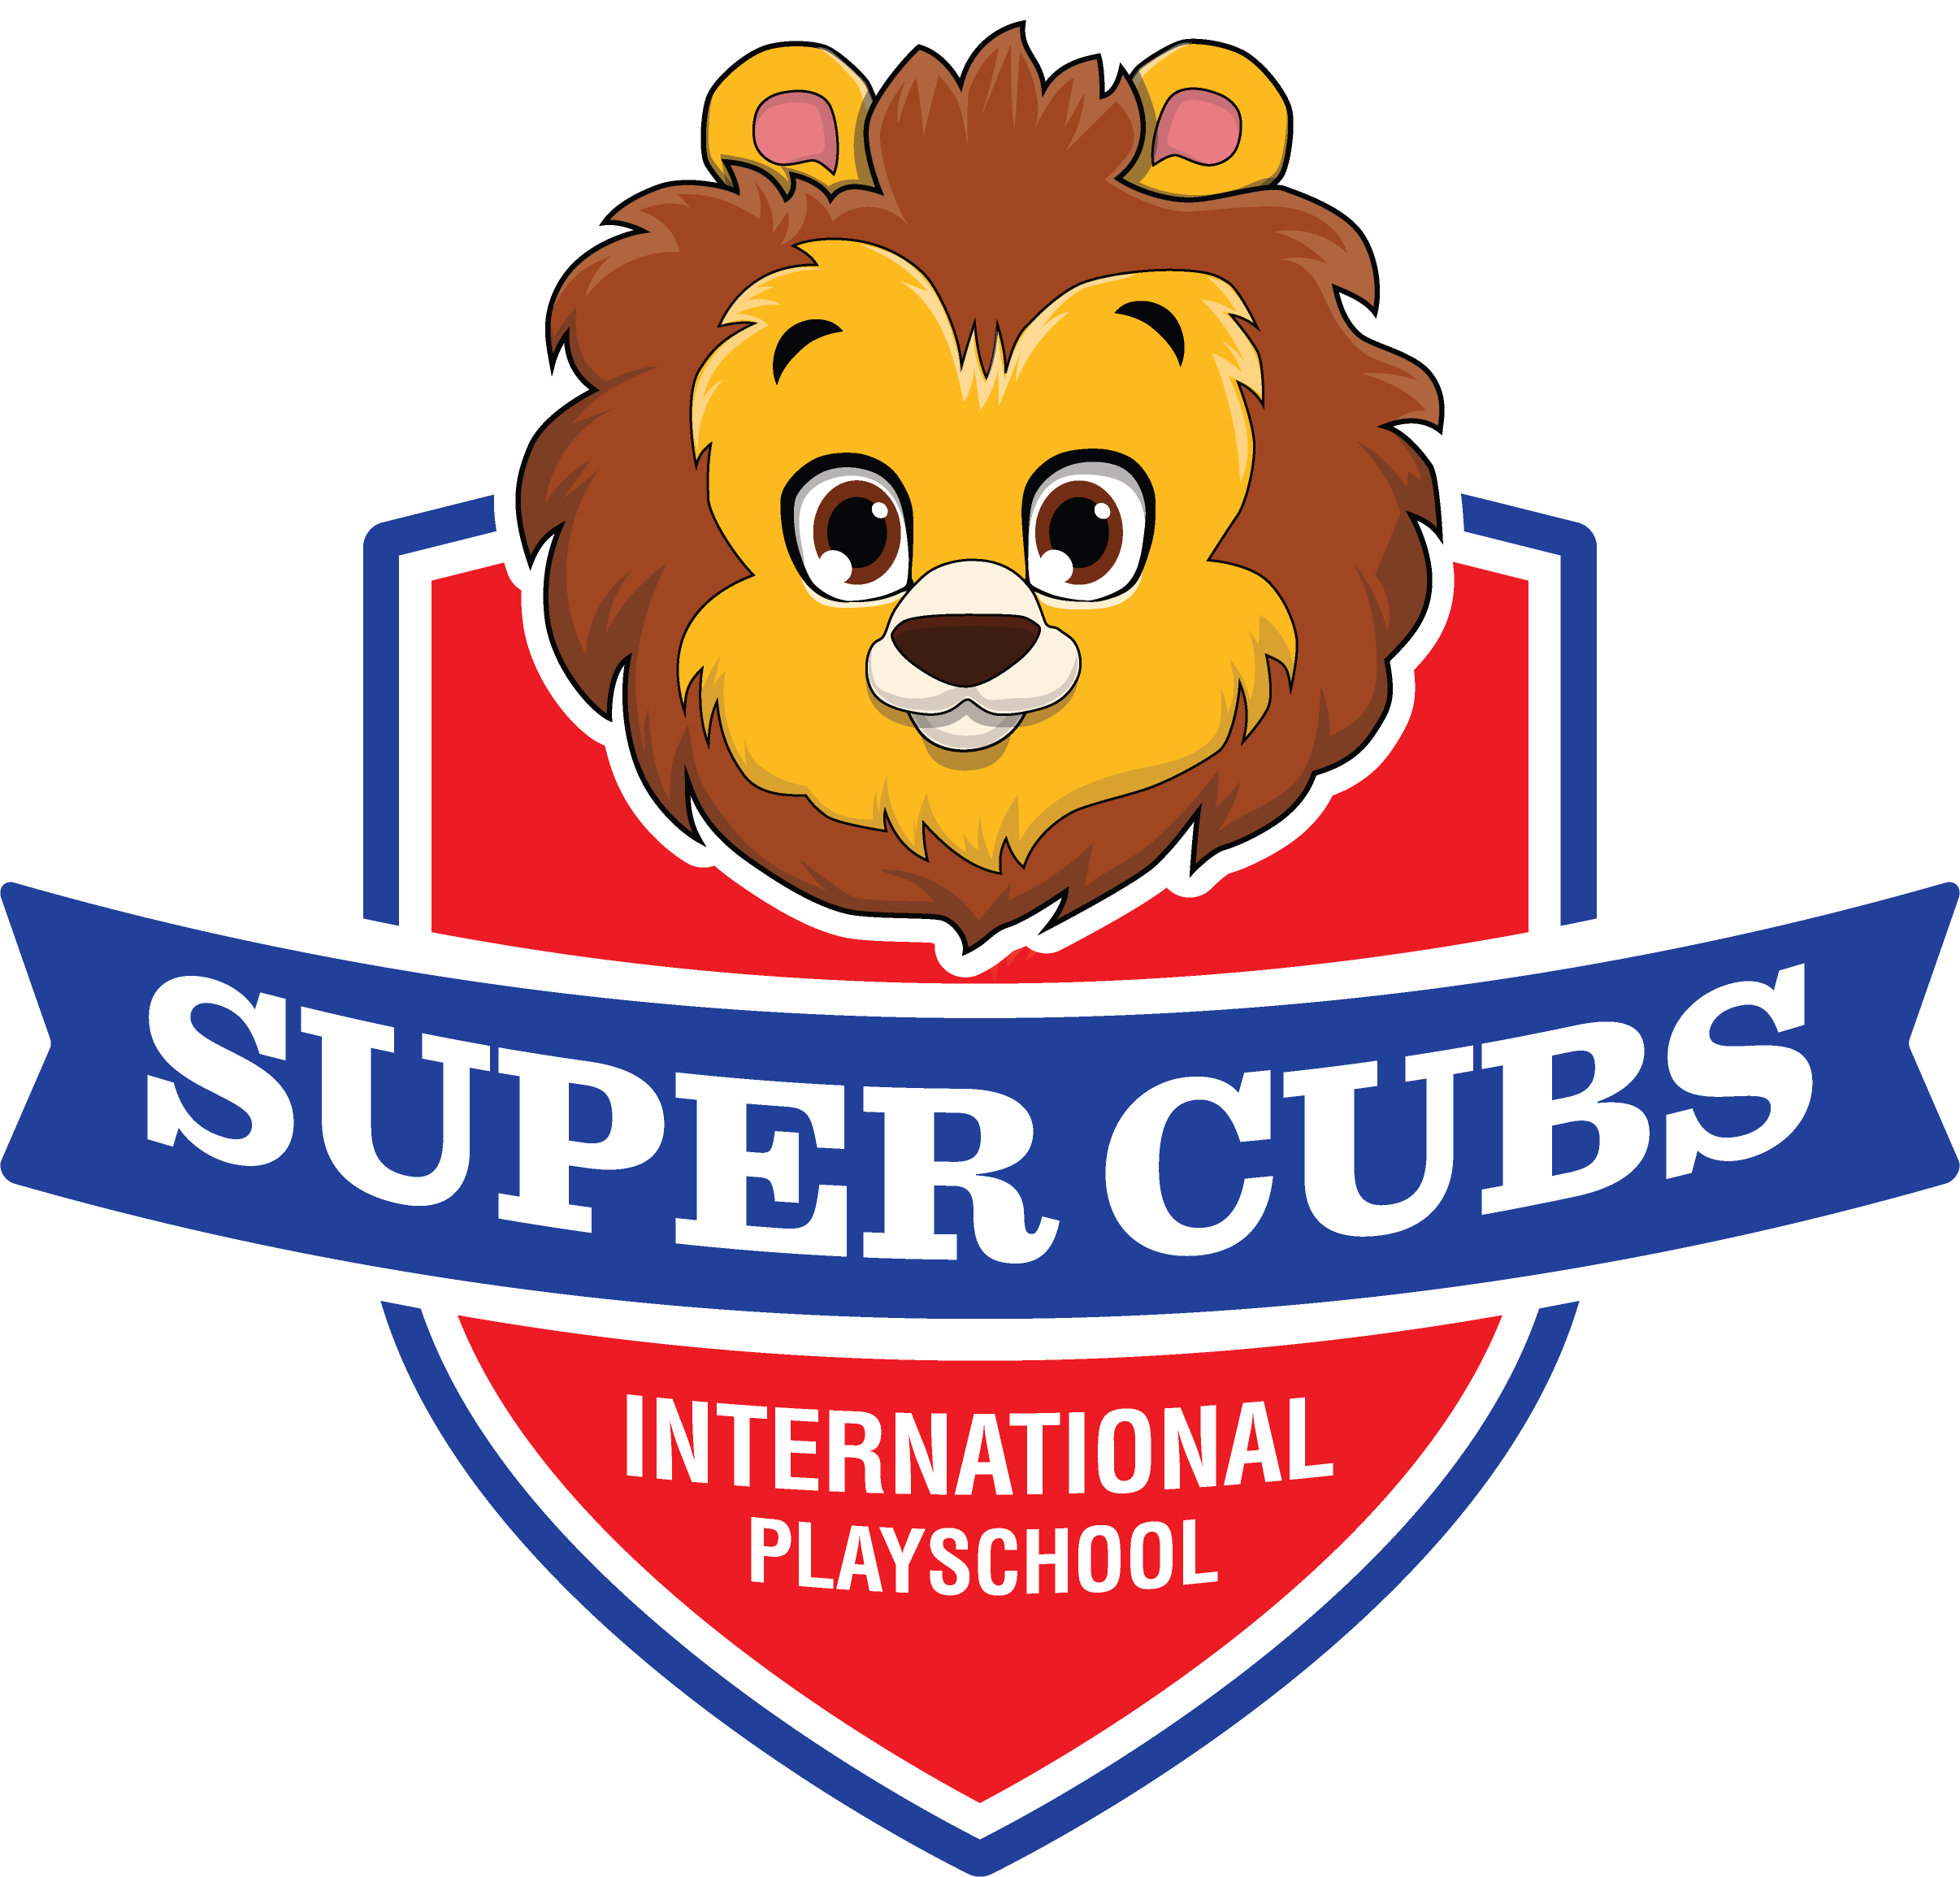 SuperCubs International Play School|Colleges|Education